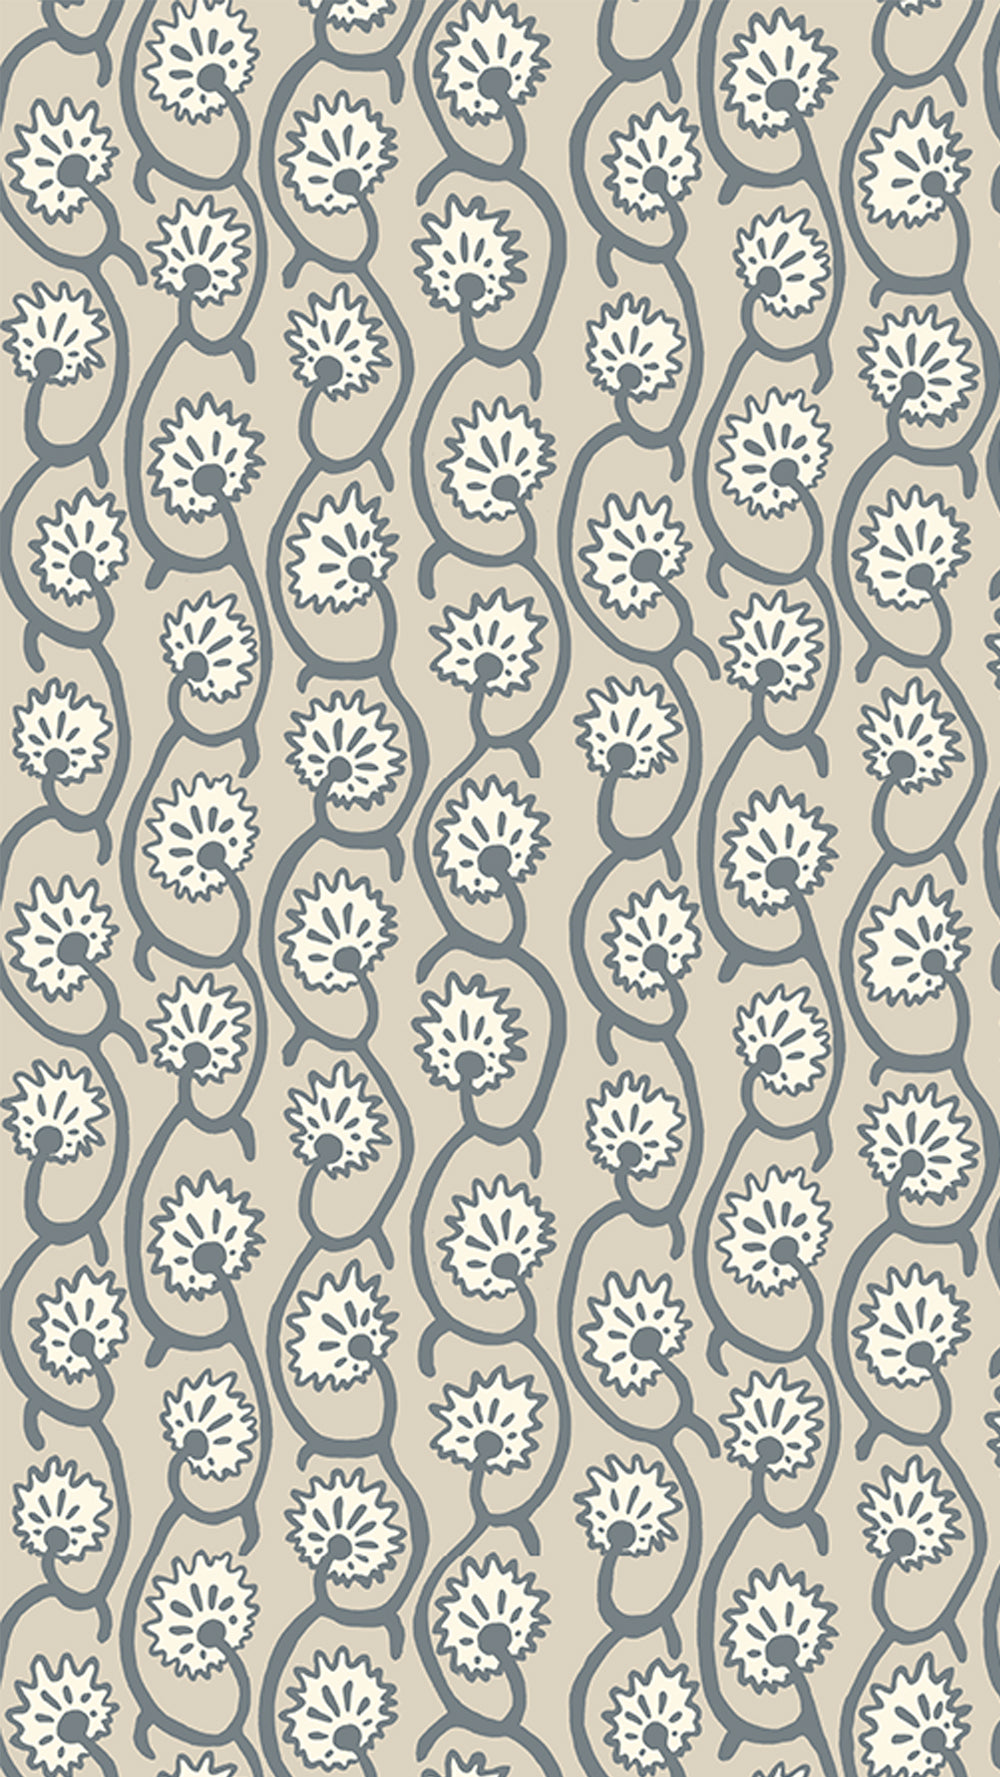 GER-024-017-014-josephine-munsey-geranium-stripe-blue-white-sand-organic-stripes-botanical-retro-wallpaper-pattern-leaves